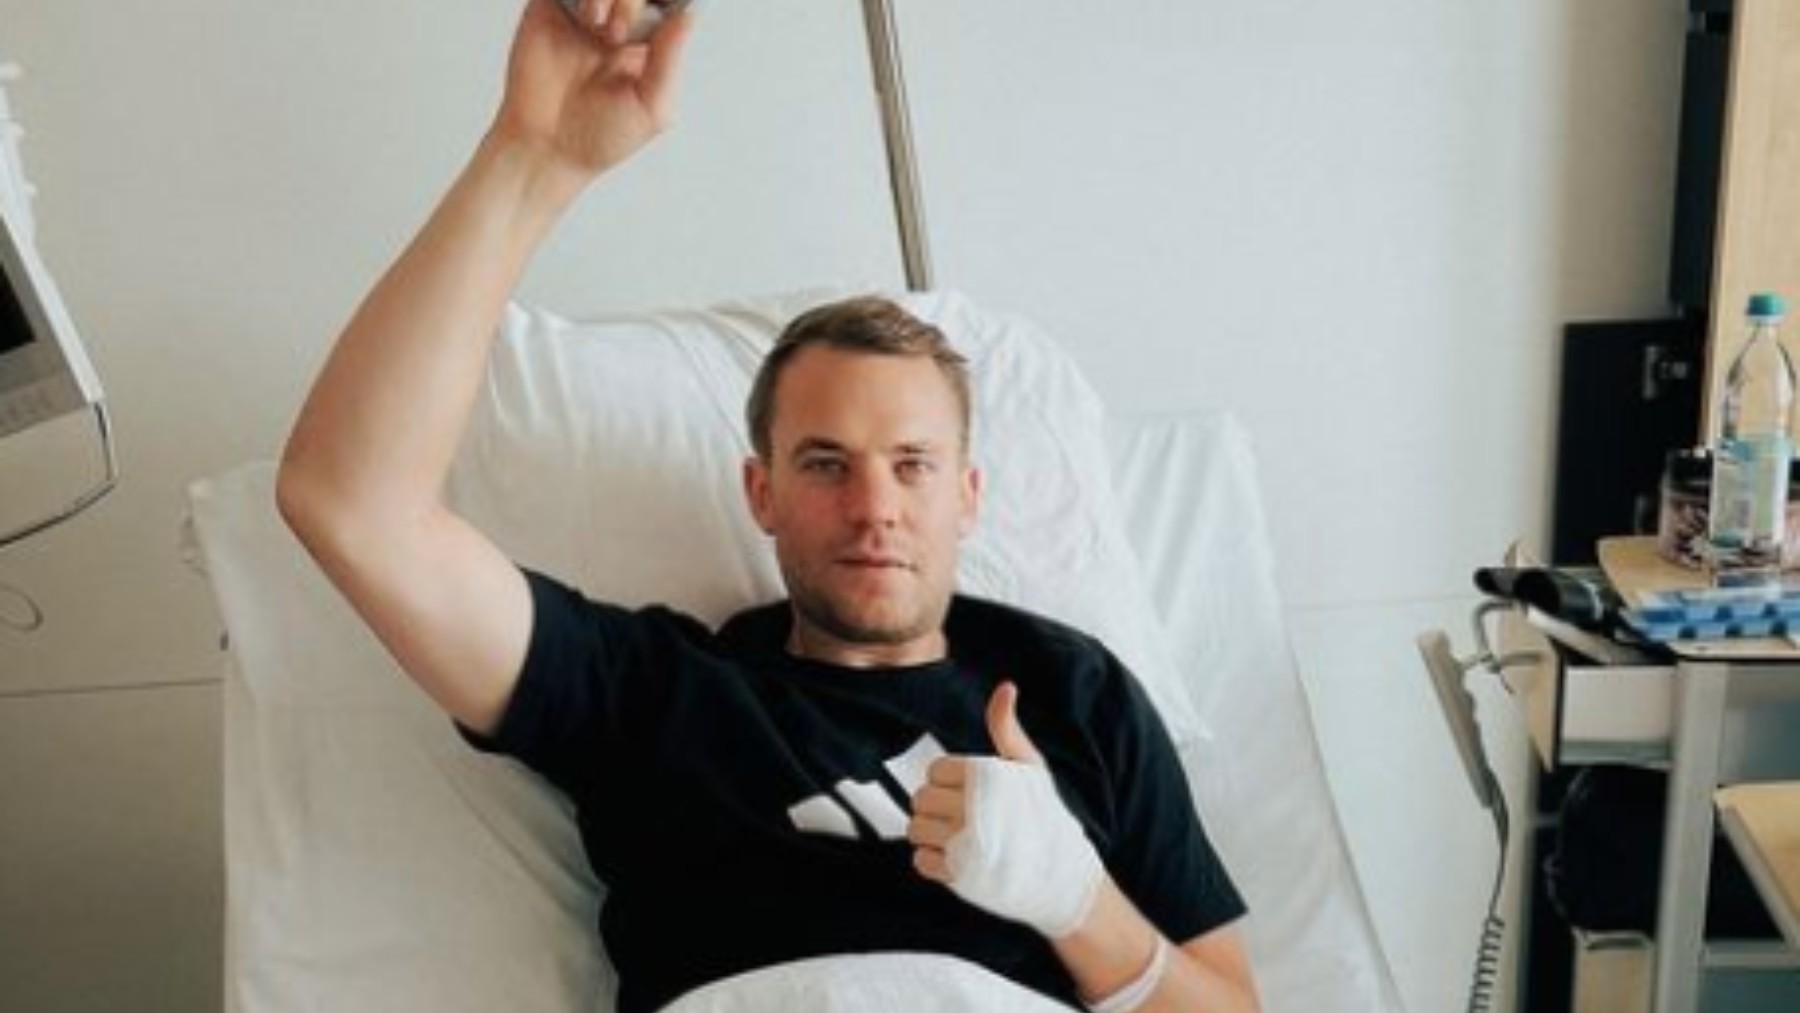 Neuer, en el hospital. (Instagram)